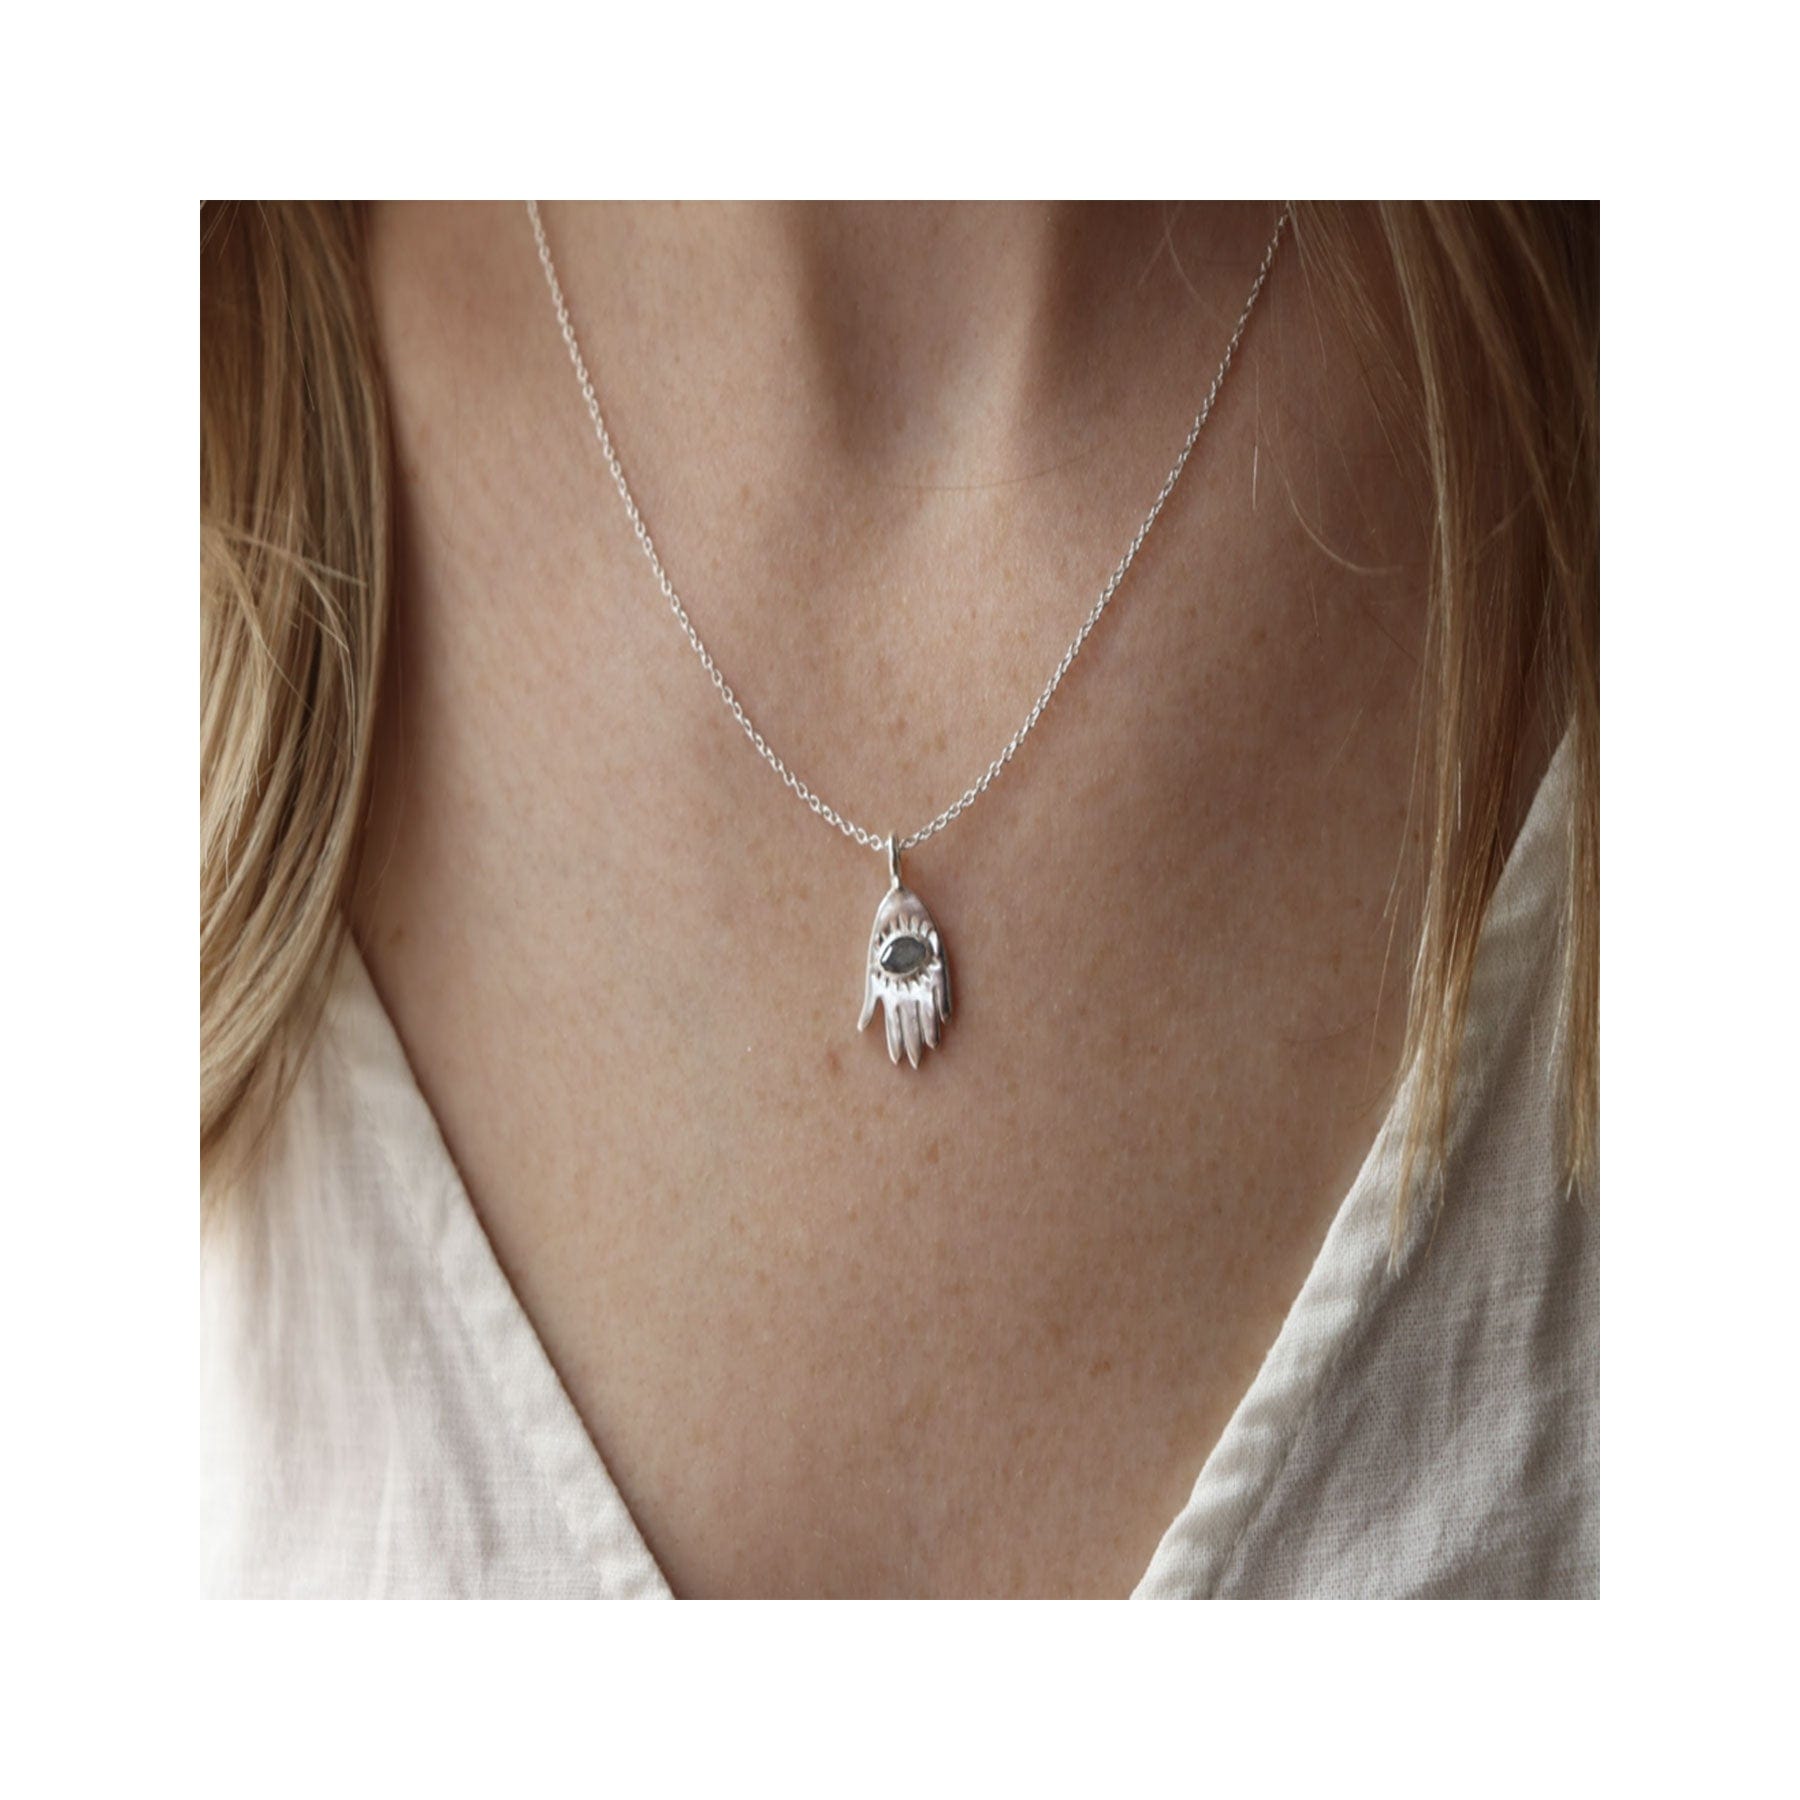 Asha necklace with labradorite stone silver